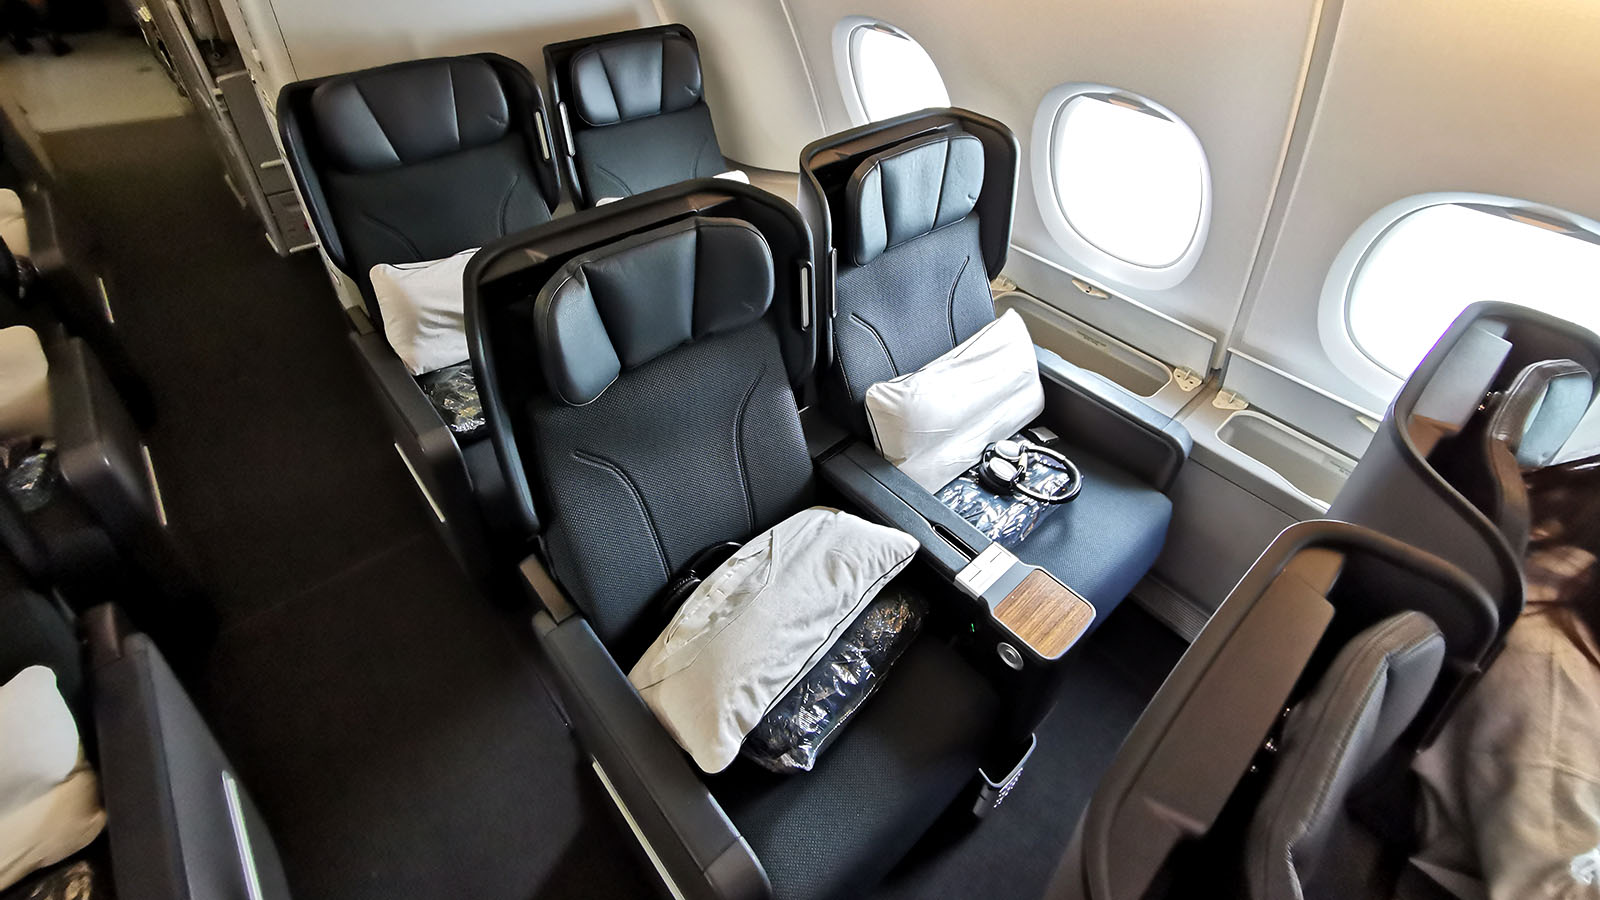 Couples of seats in Qantas A380 Premium Economy